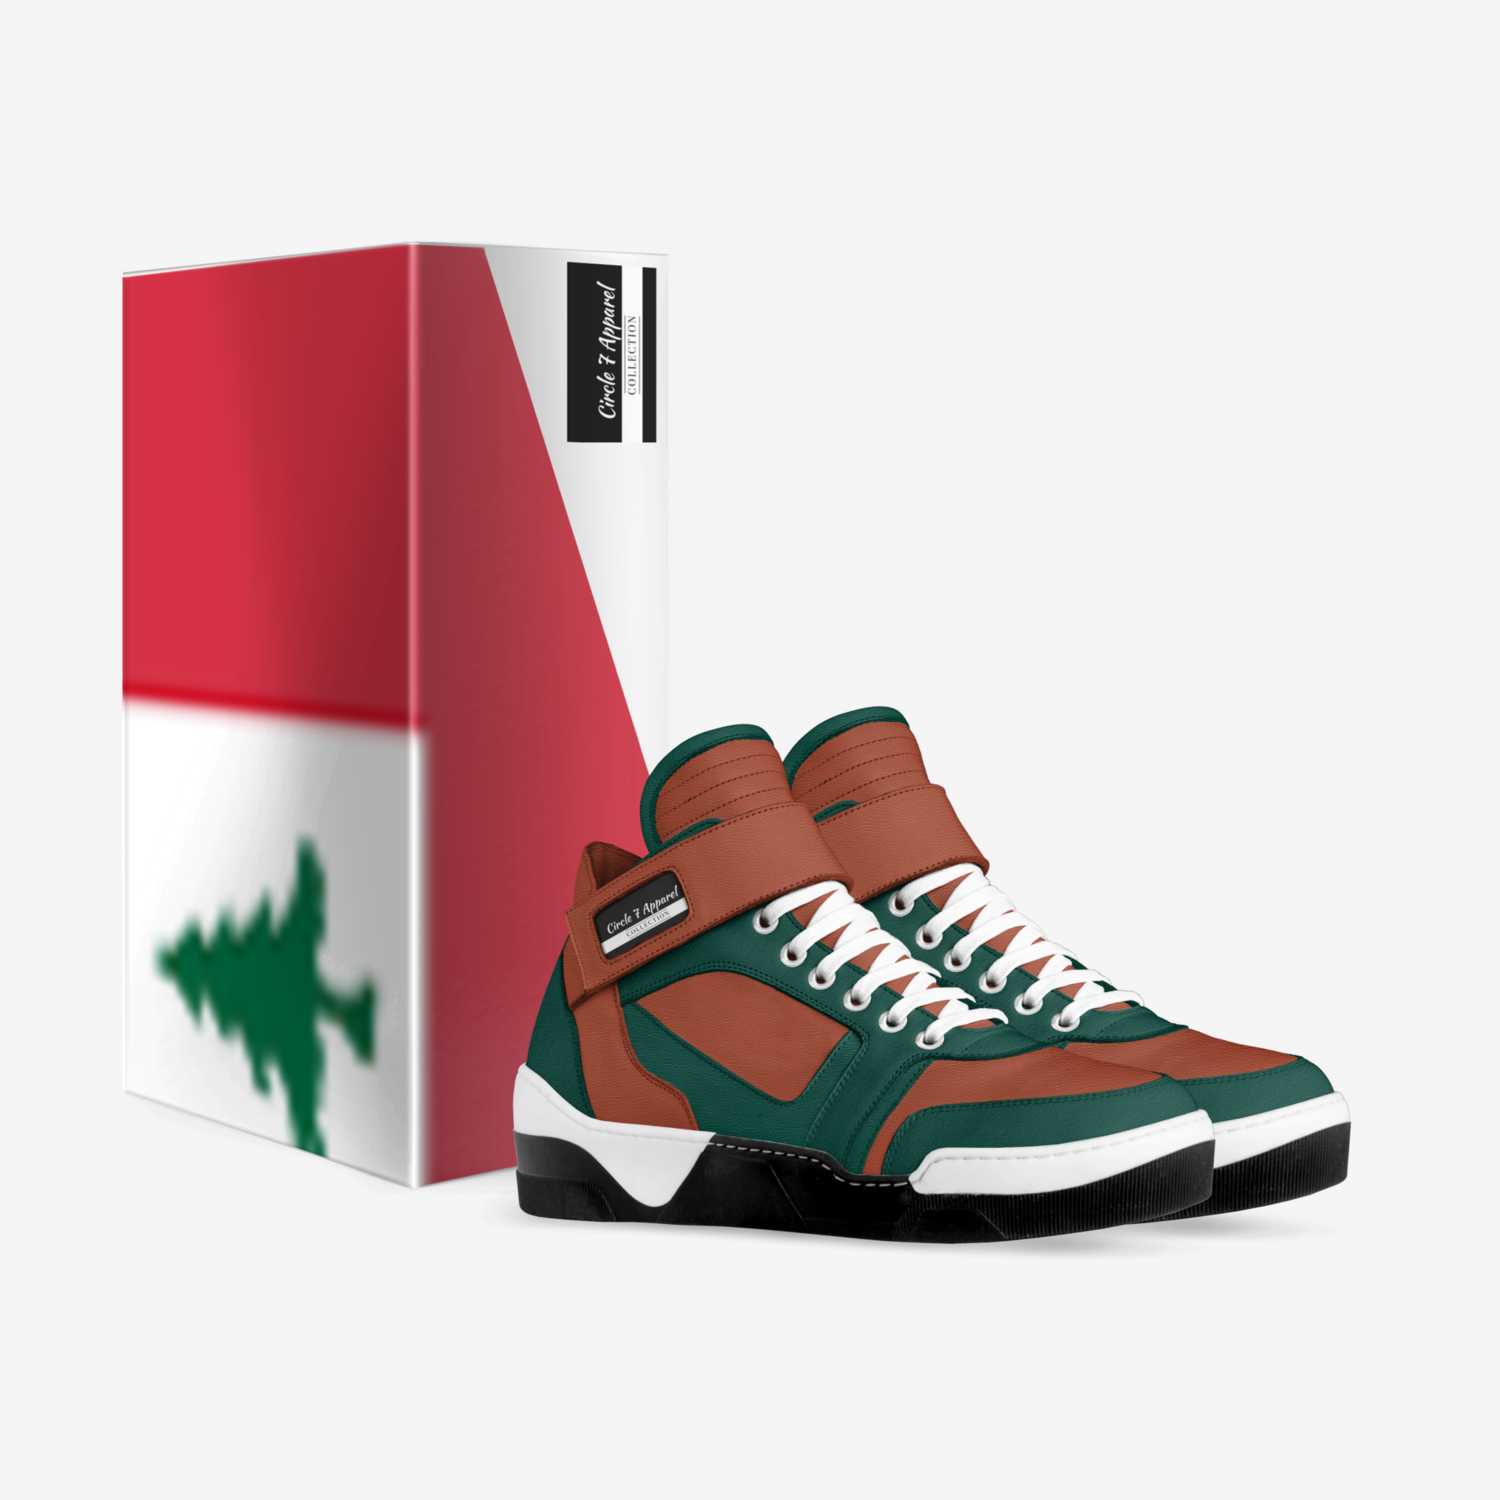 Circle 7 Apparel custom made in Italy shoes by Tehuti El | Box view